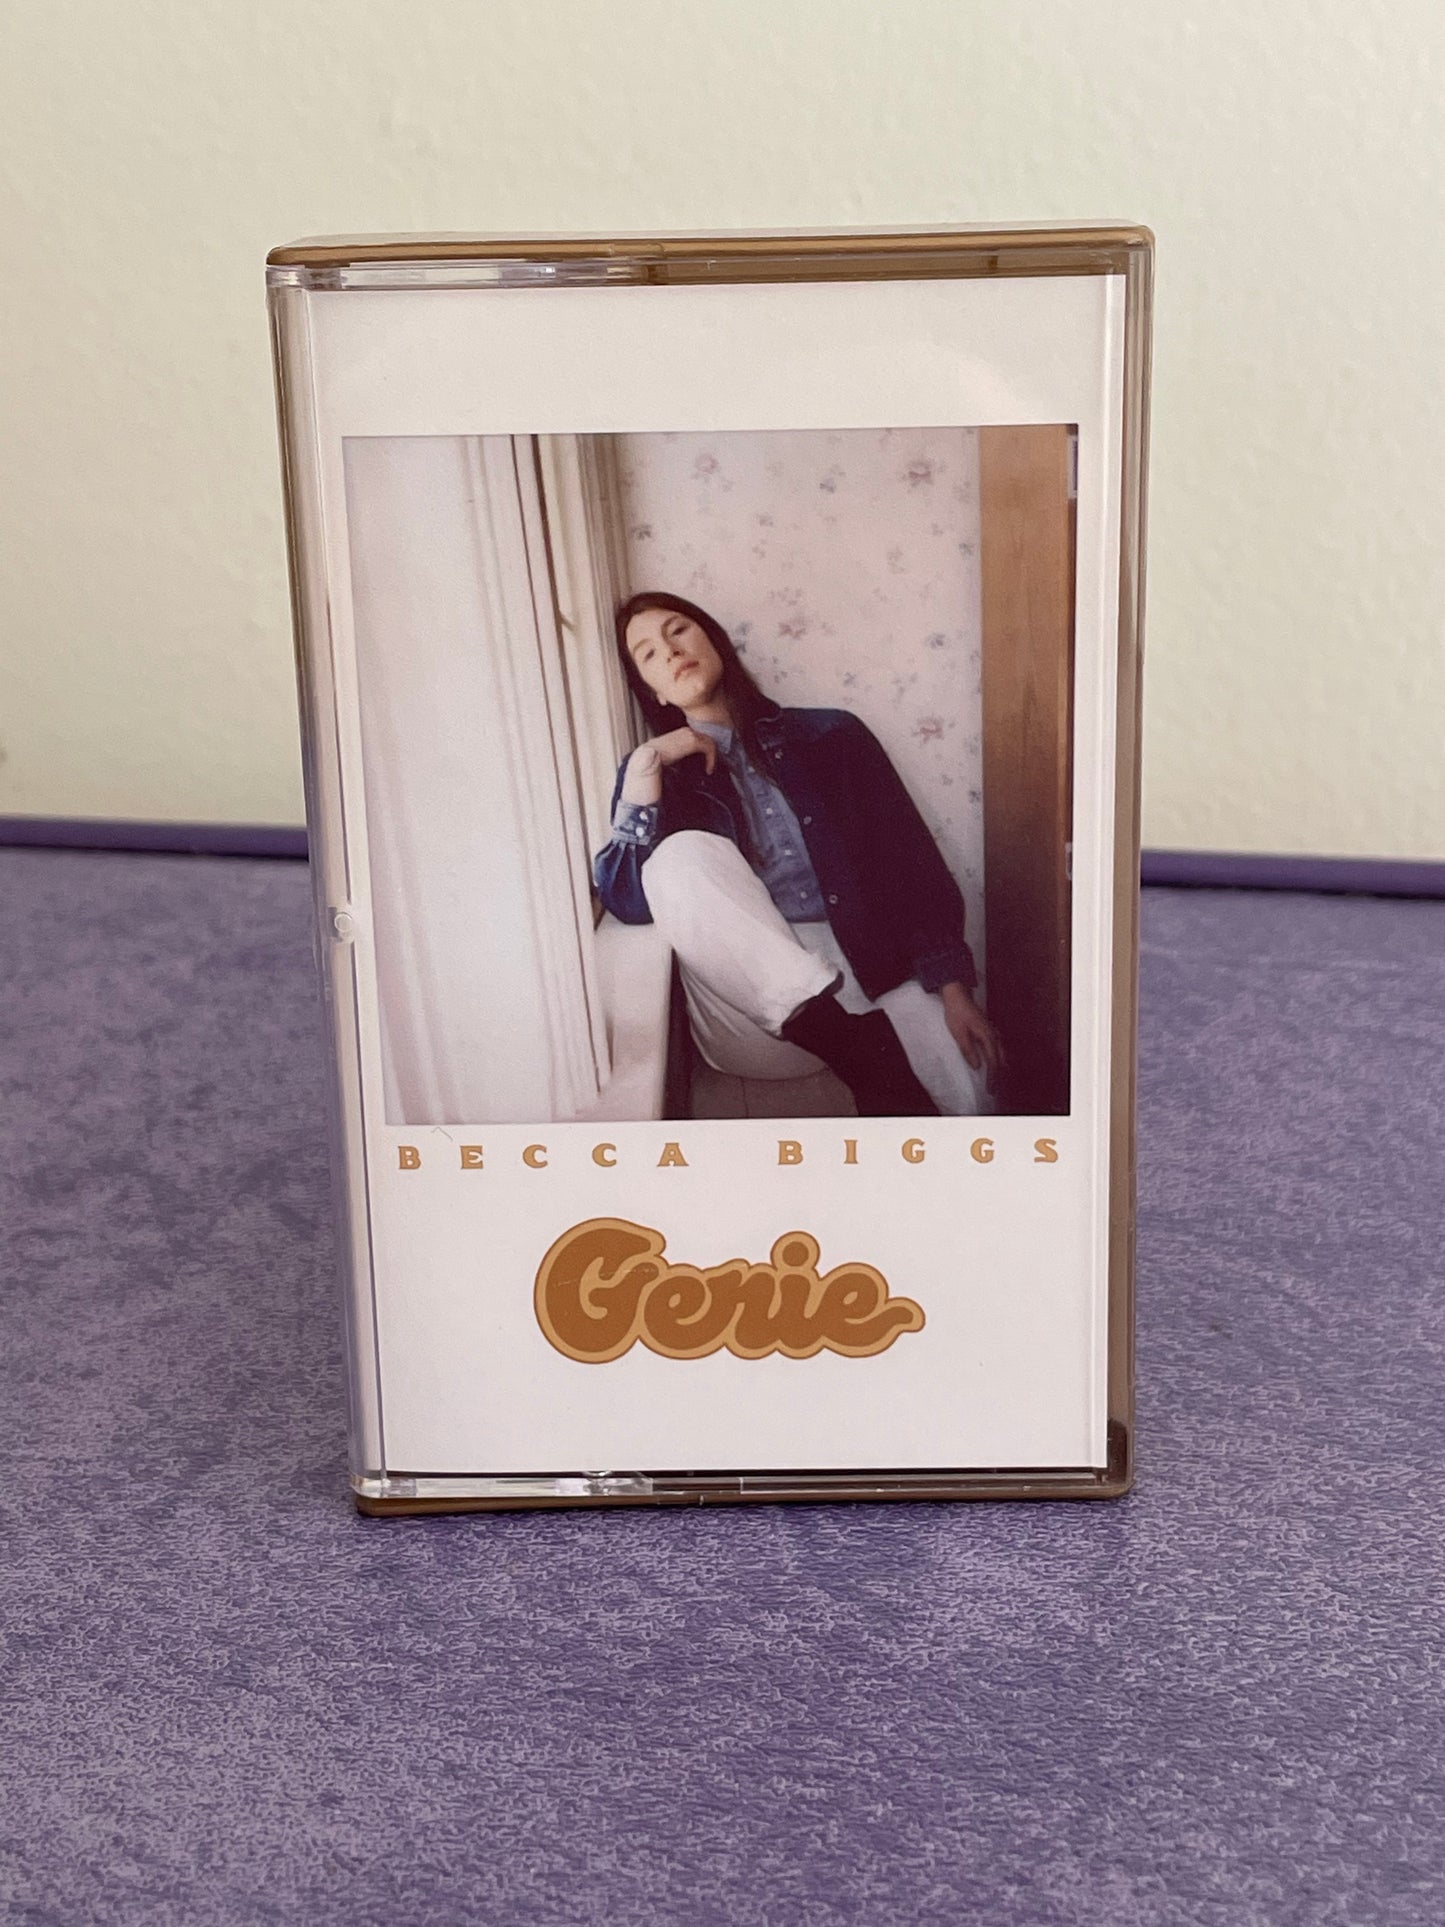 Cassette Tape of Genie